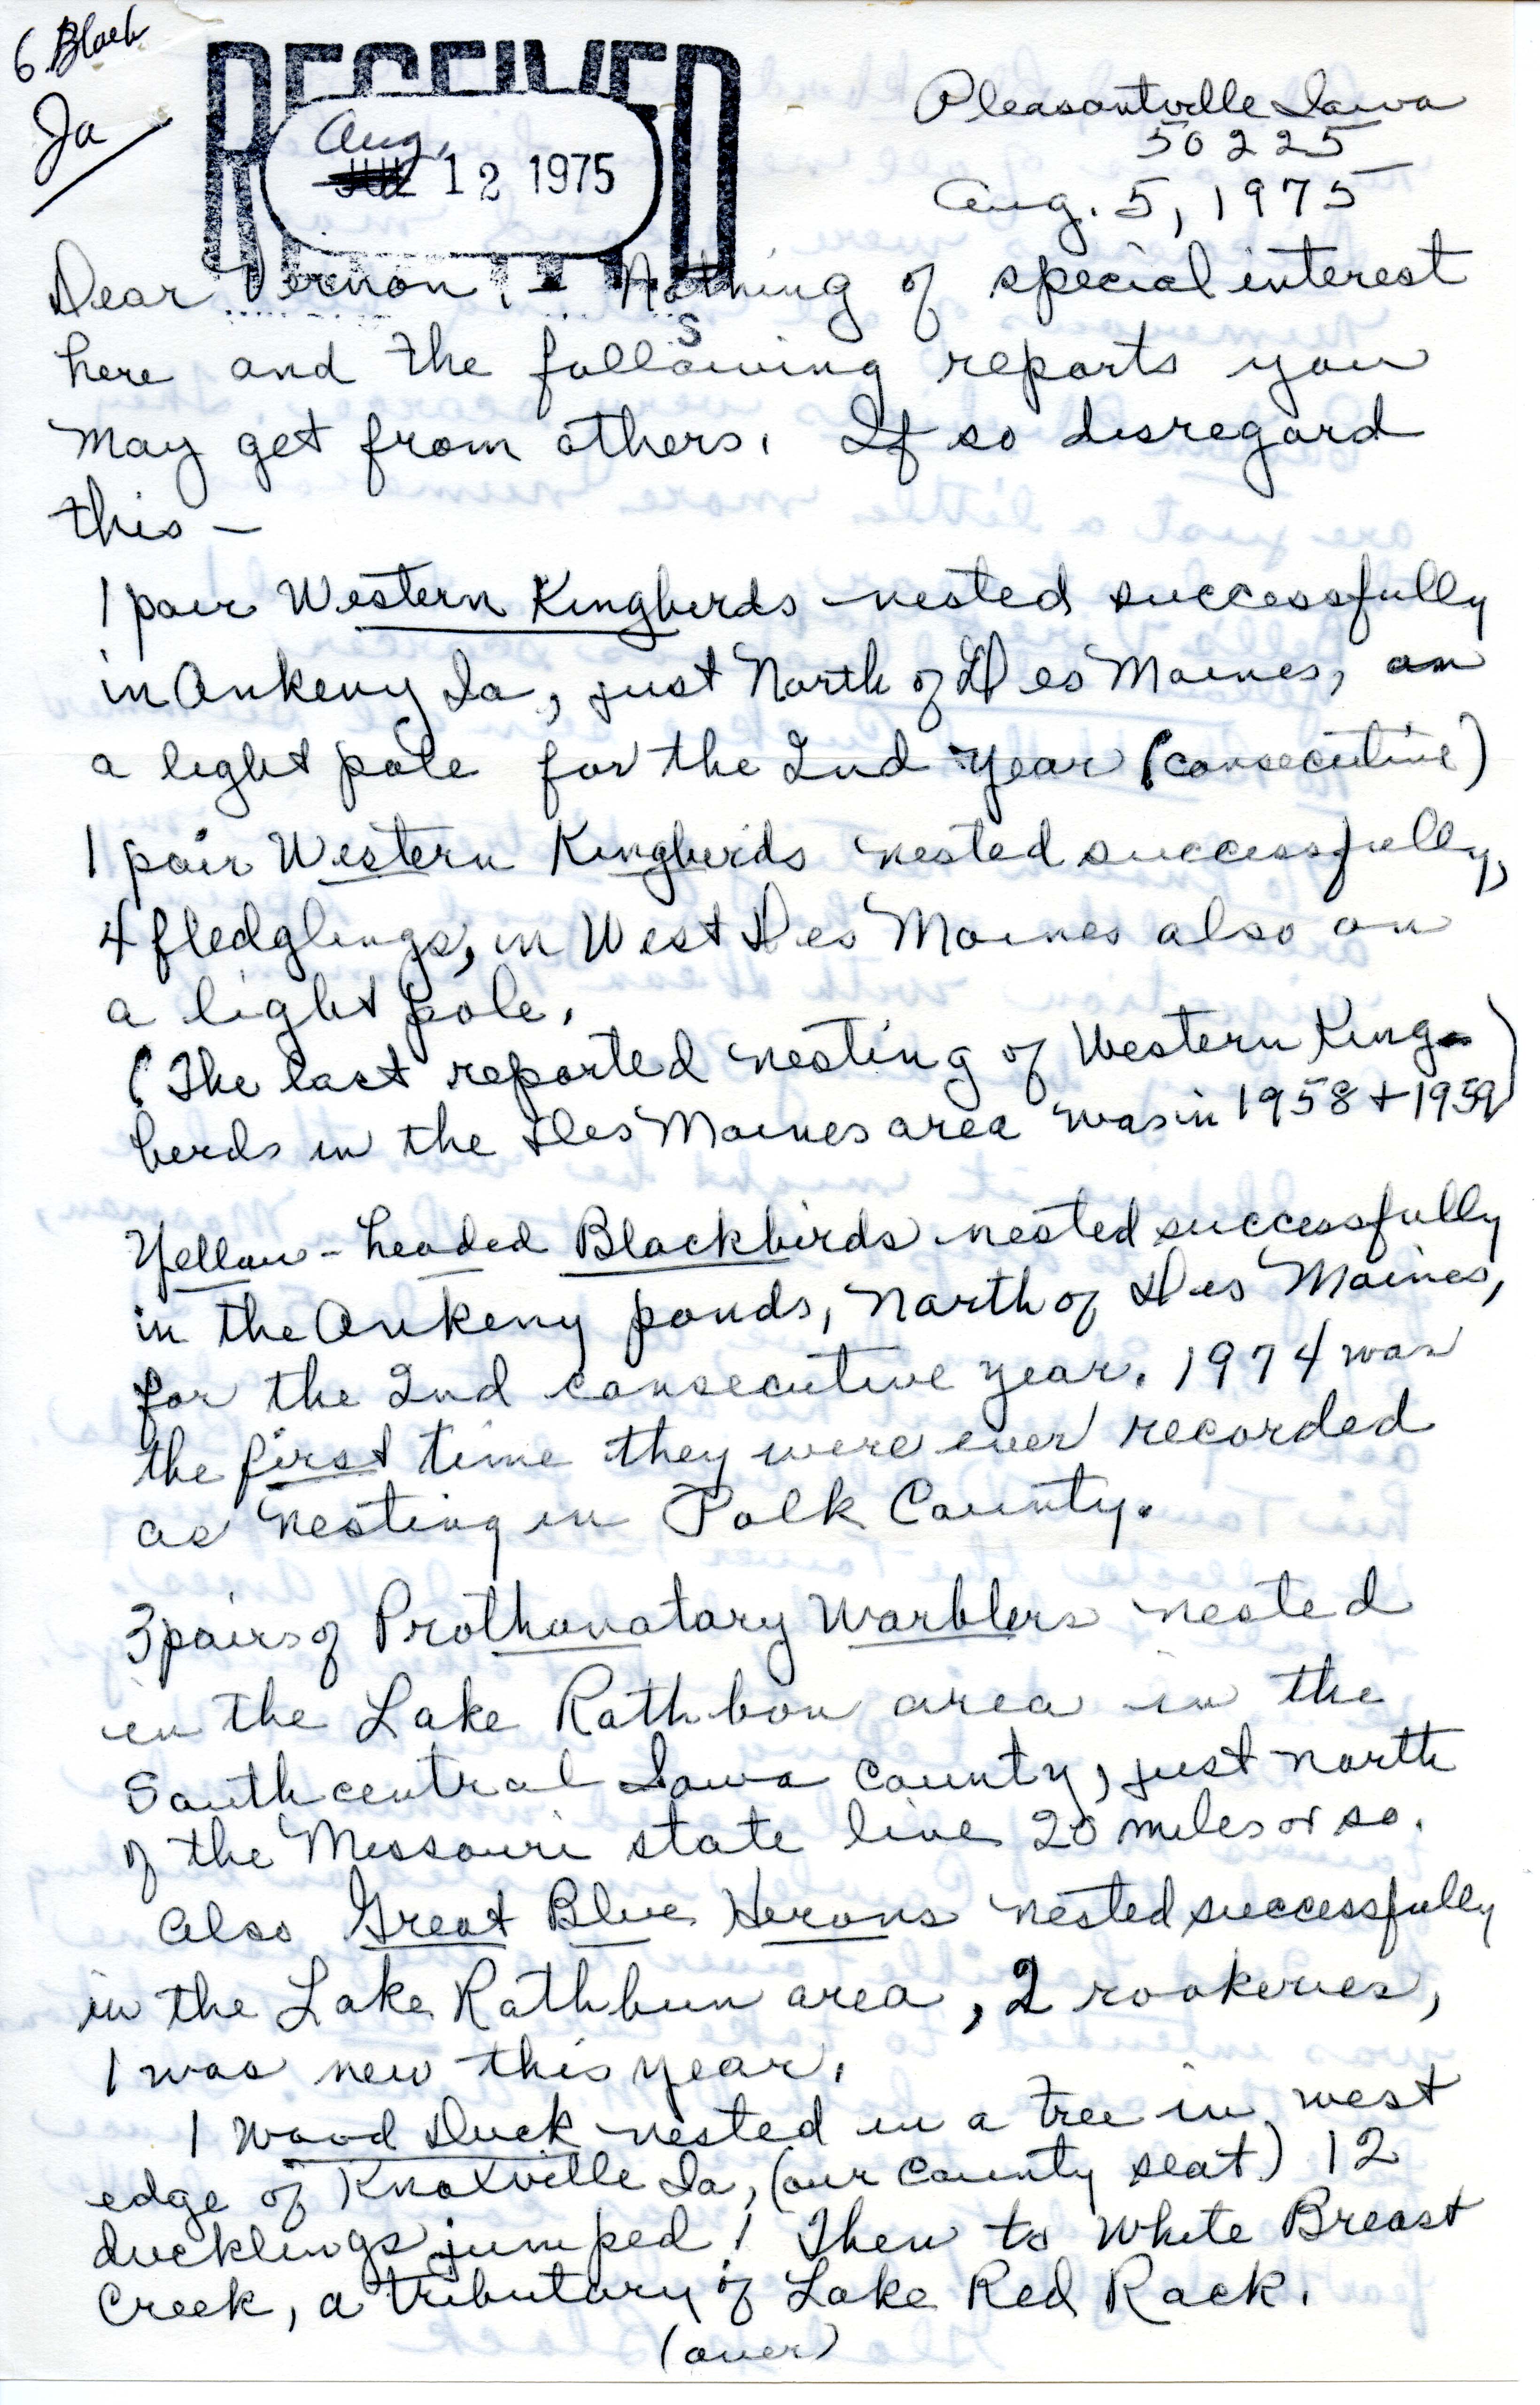 Gladys Black letter to Vernon M. Kleen regarding birds sighted during breeding season 1975, August 5, 1975